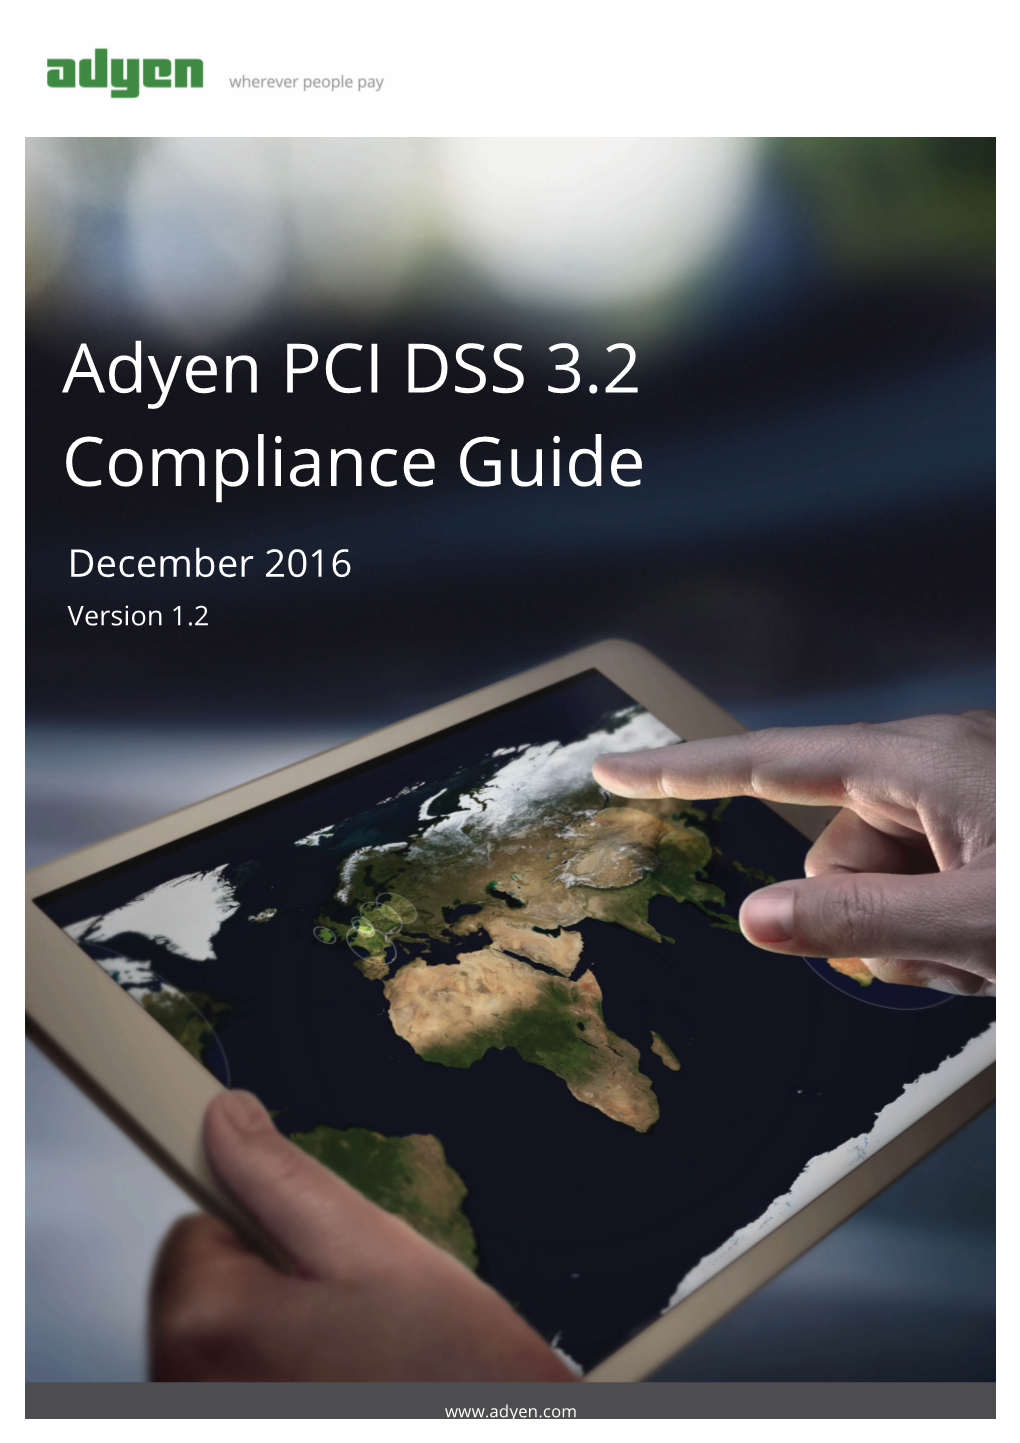 Adyen PCI DSS 3.2 Compliance Guide